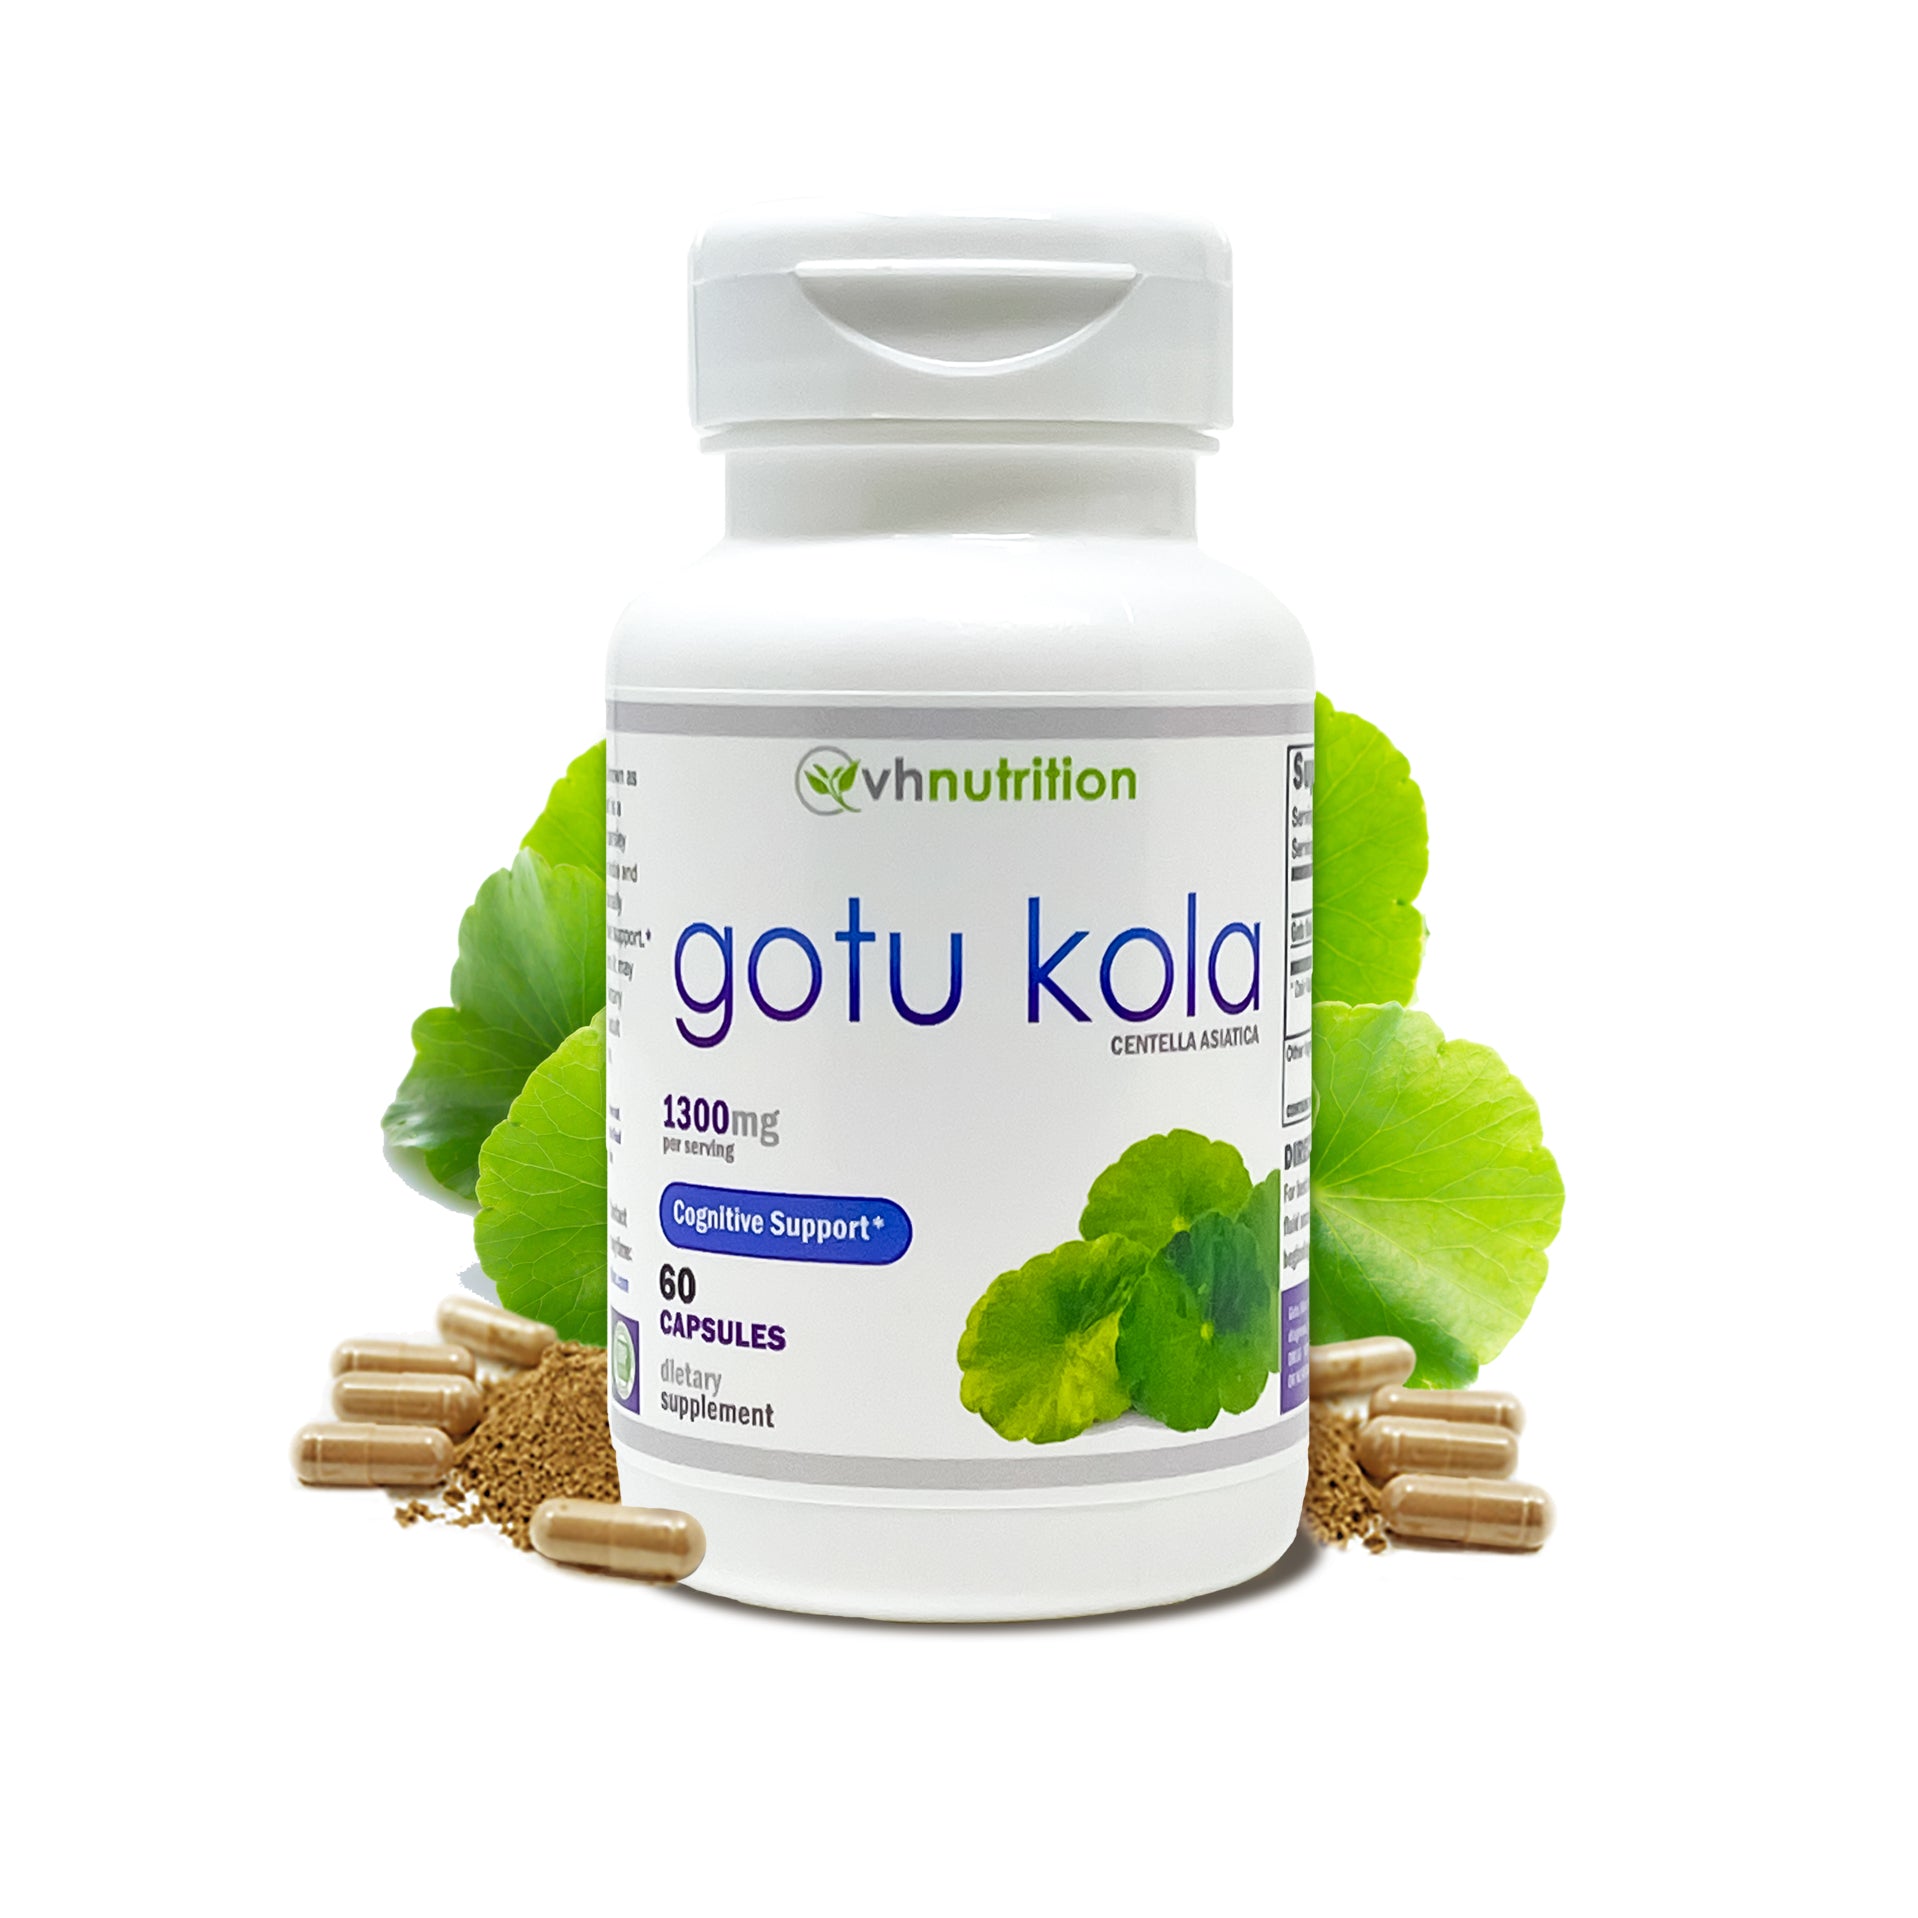 VH Nutrition GOTU KOLA | Gotu Kola capsules | Cognitive and Memory Support Supplement* | 1300mg per serving 60 Capsules | Standardized Centella asiatica Extract